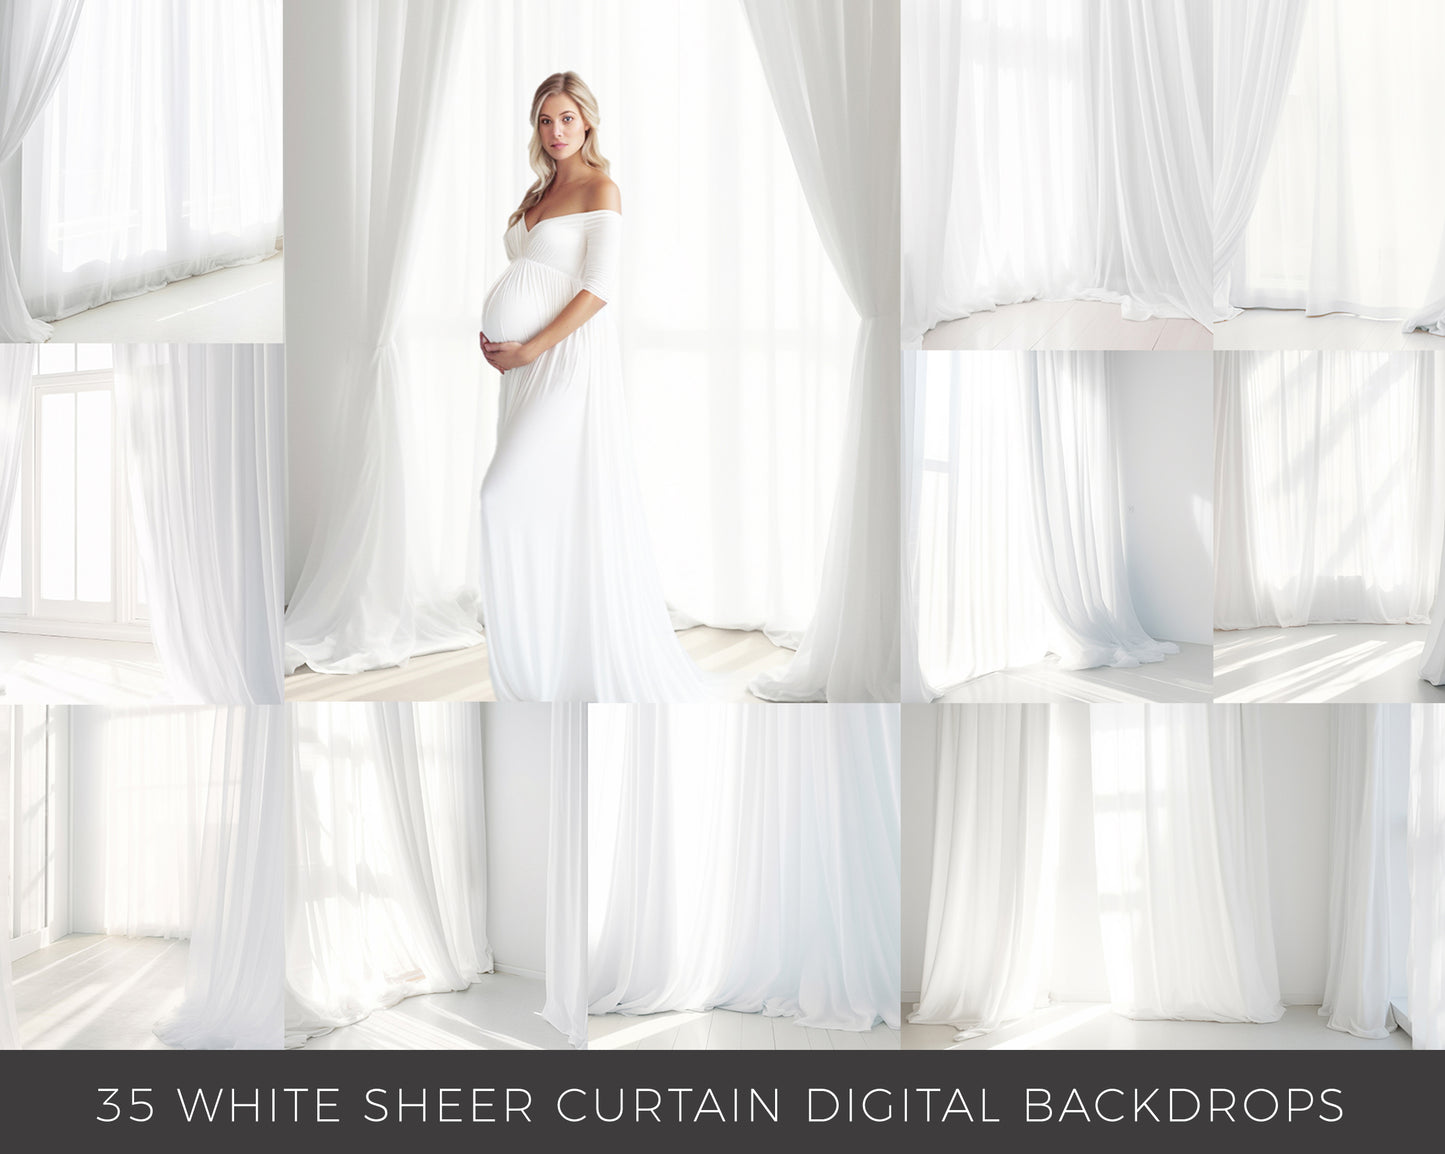 35 White Sheer Curtains Digital Backdrops